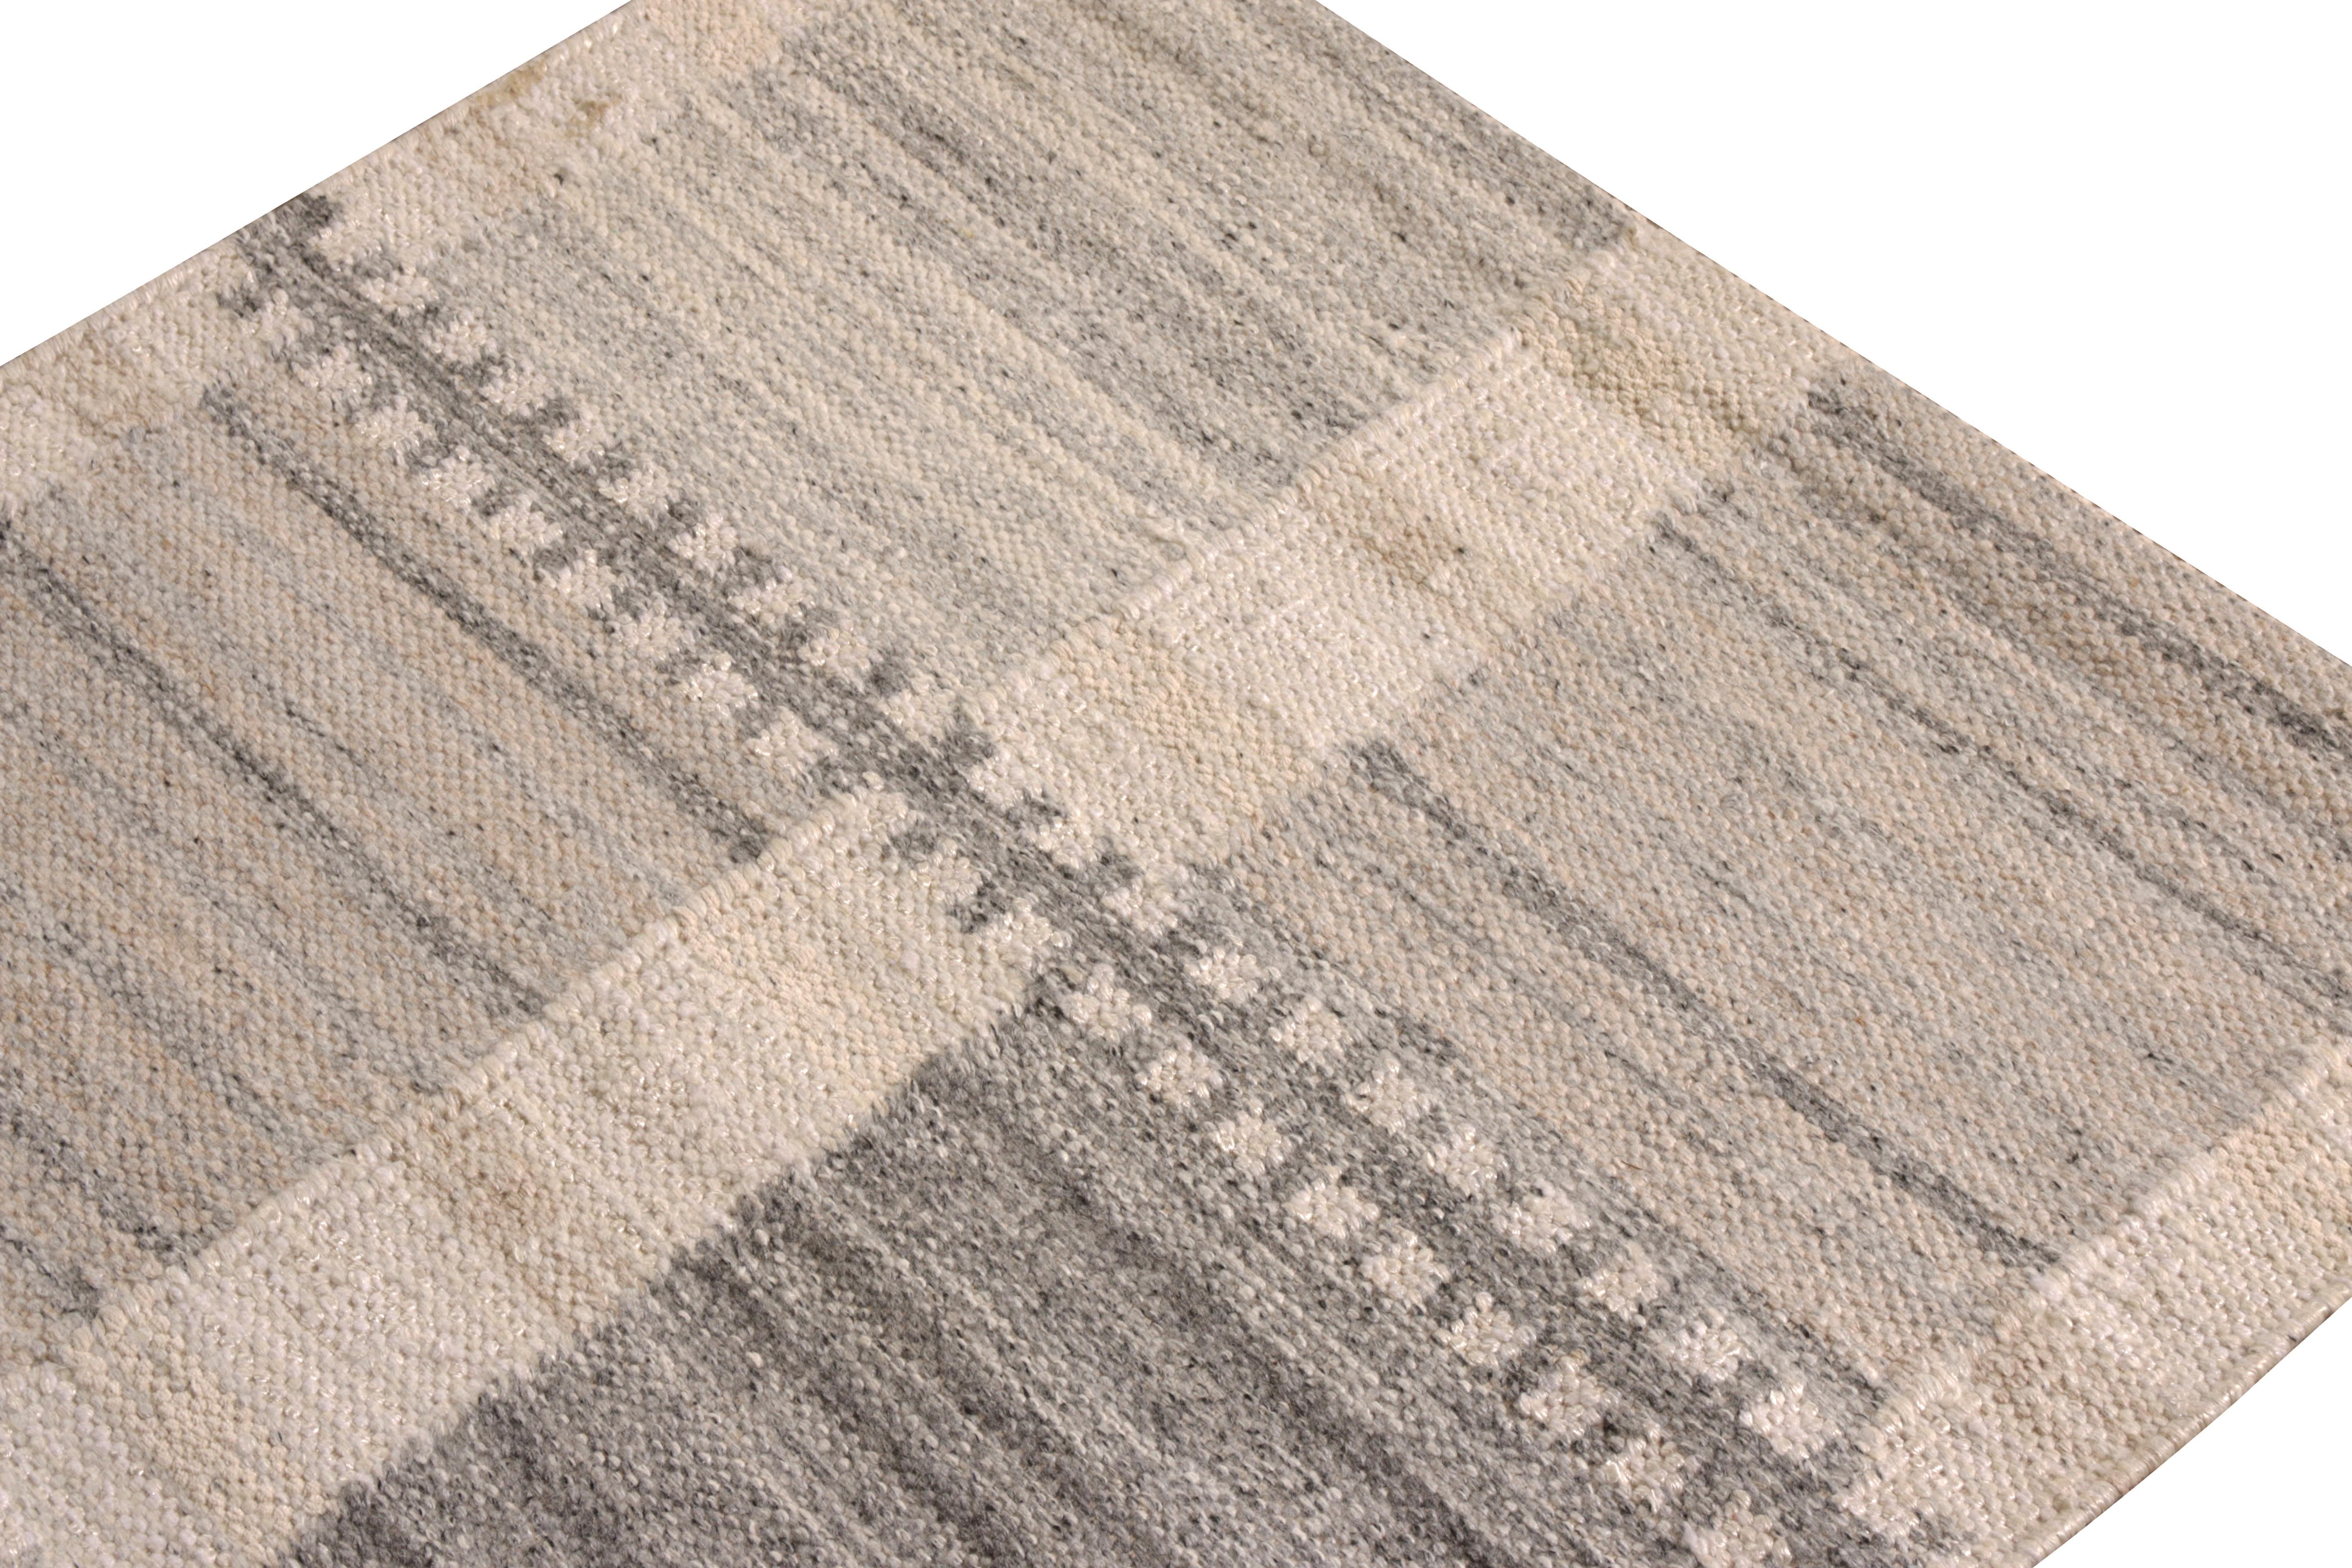 Indian Scandinavian Style Kilim Rug in Beige Gray Geometric Pattern by Rug & Kilim For Sale